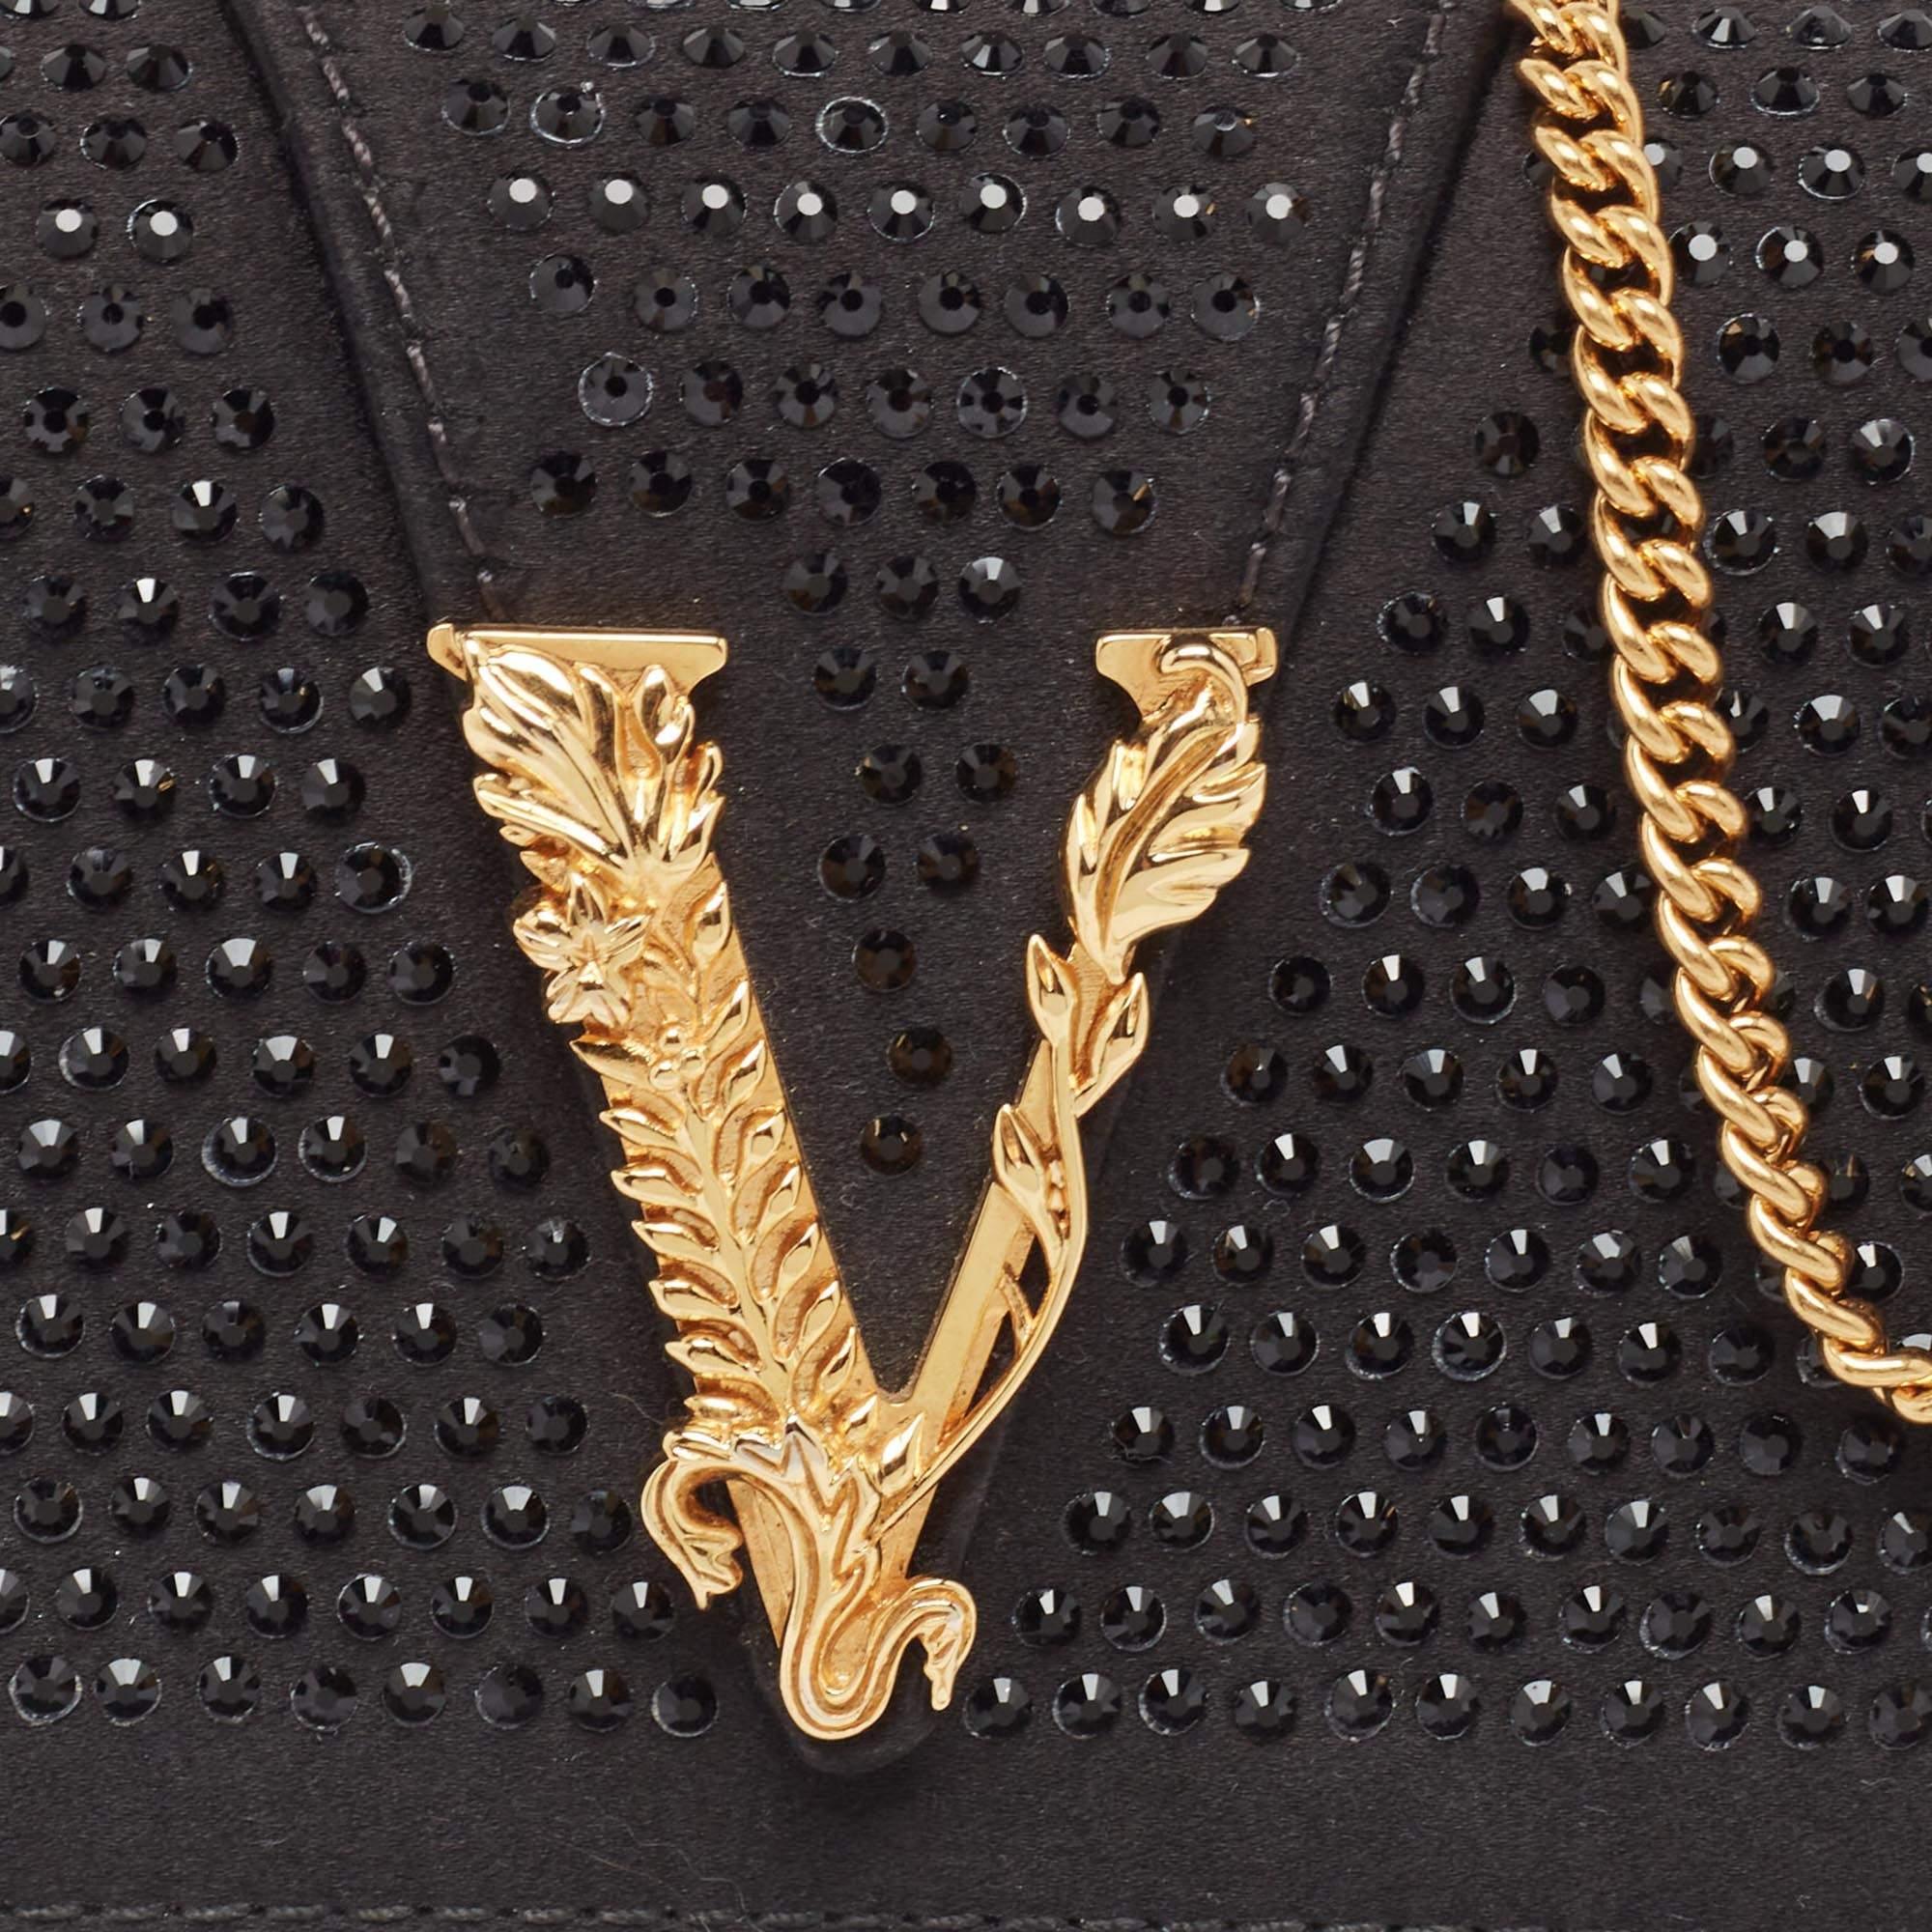 Versace Black Satin Virtus Barroco Crystals Chain Bag 4